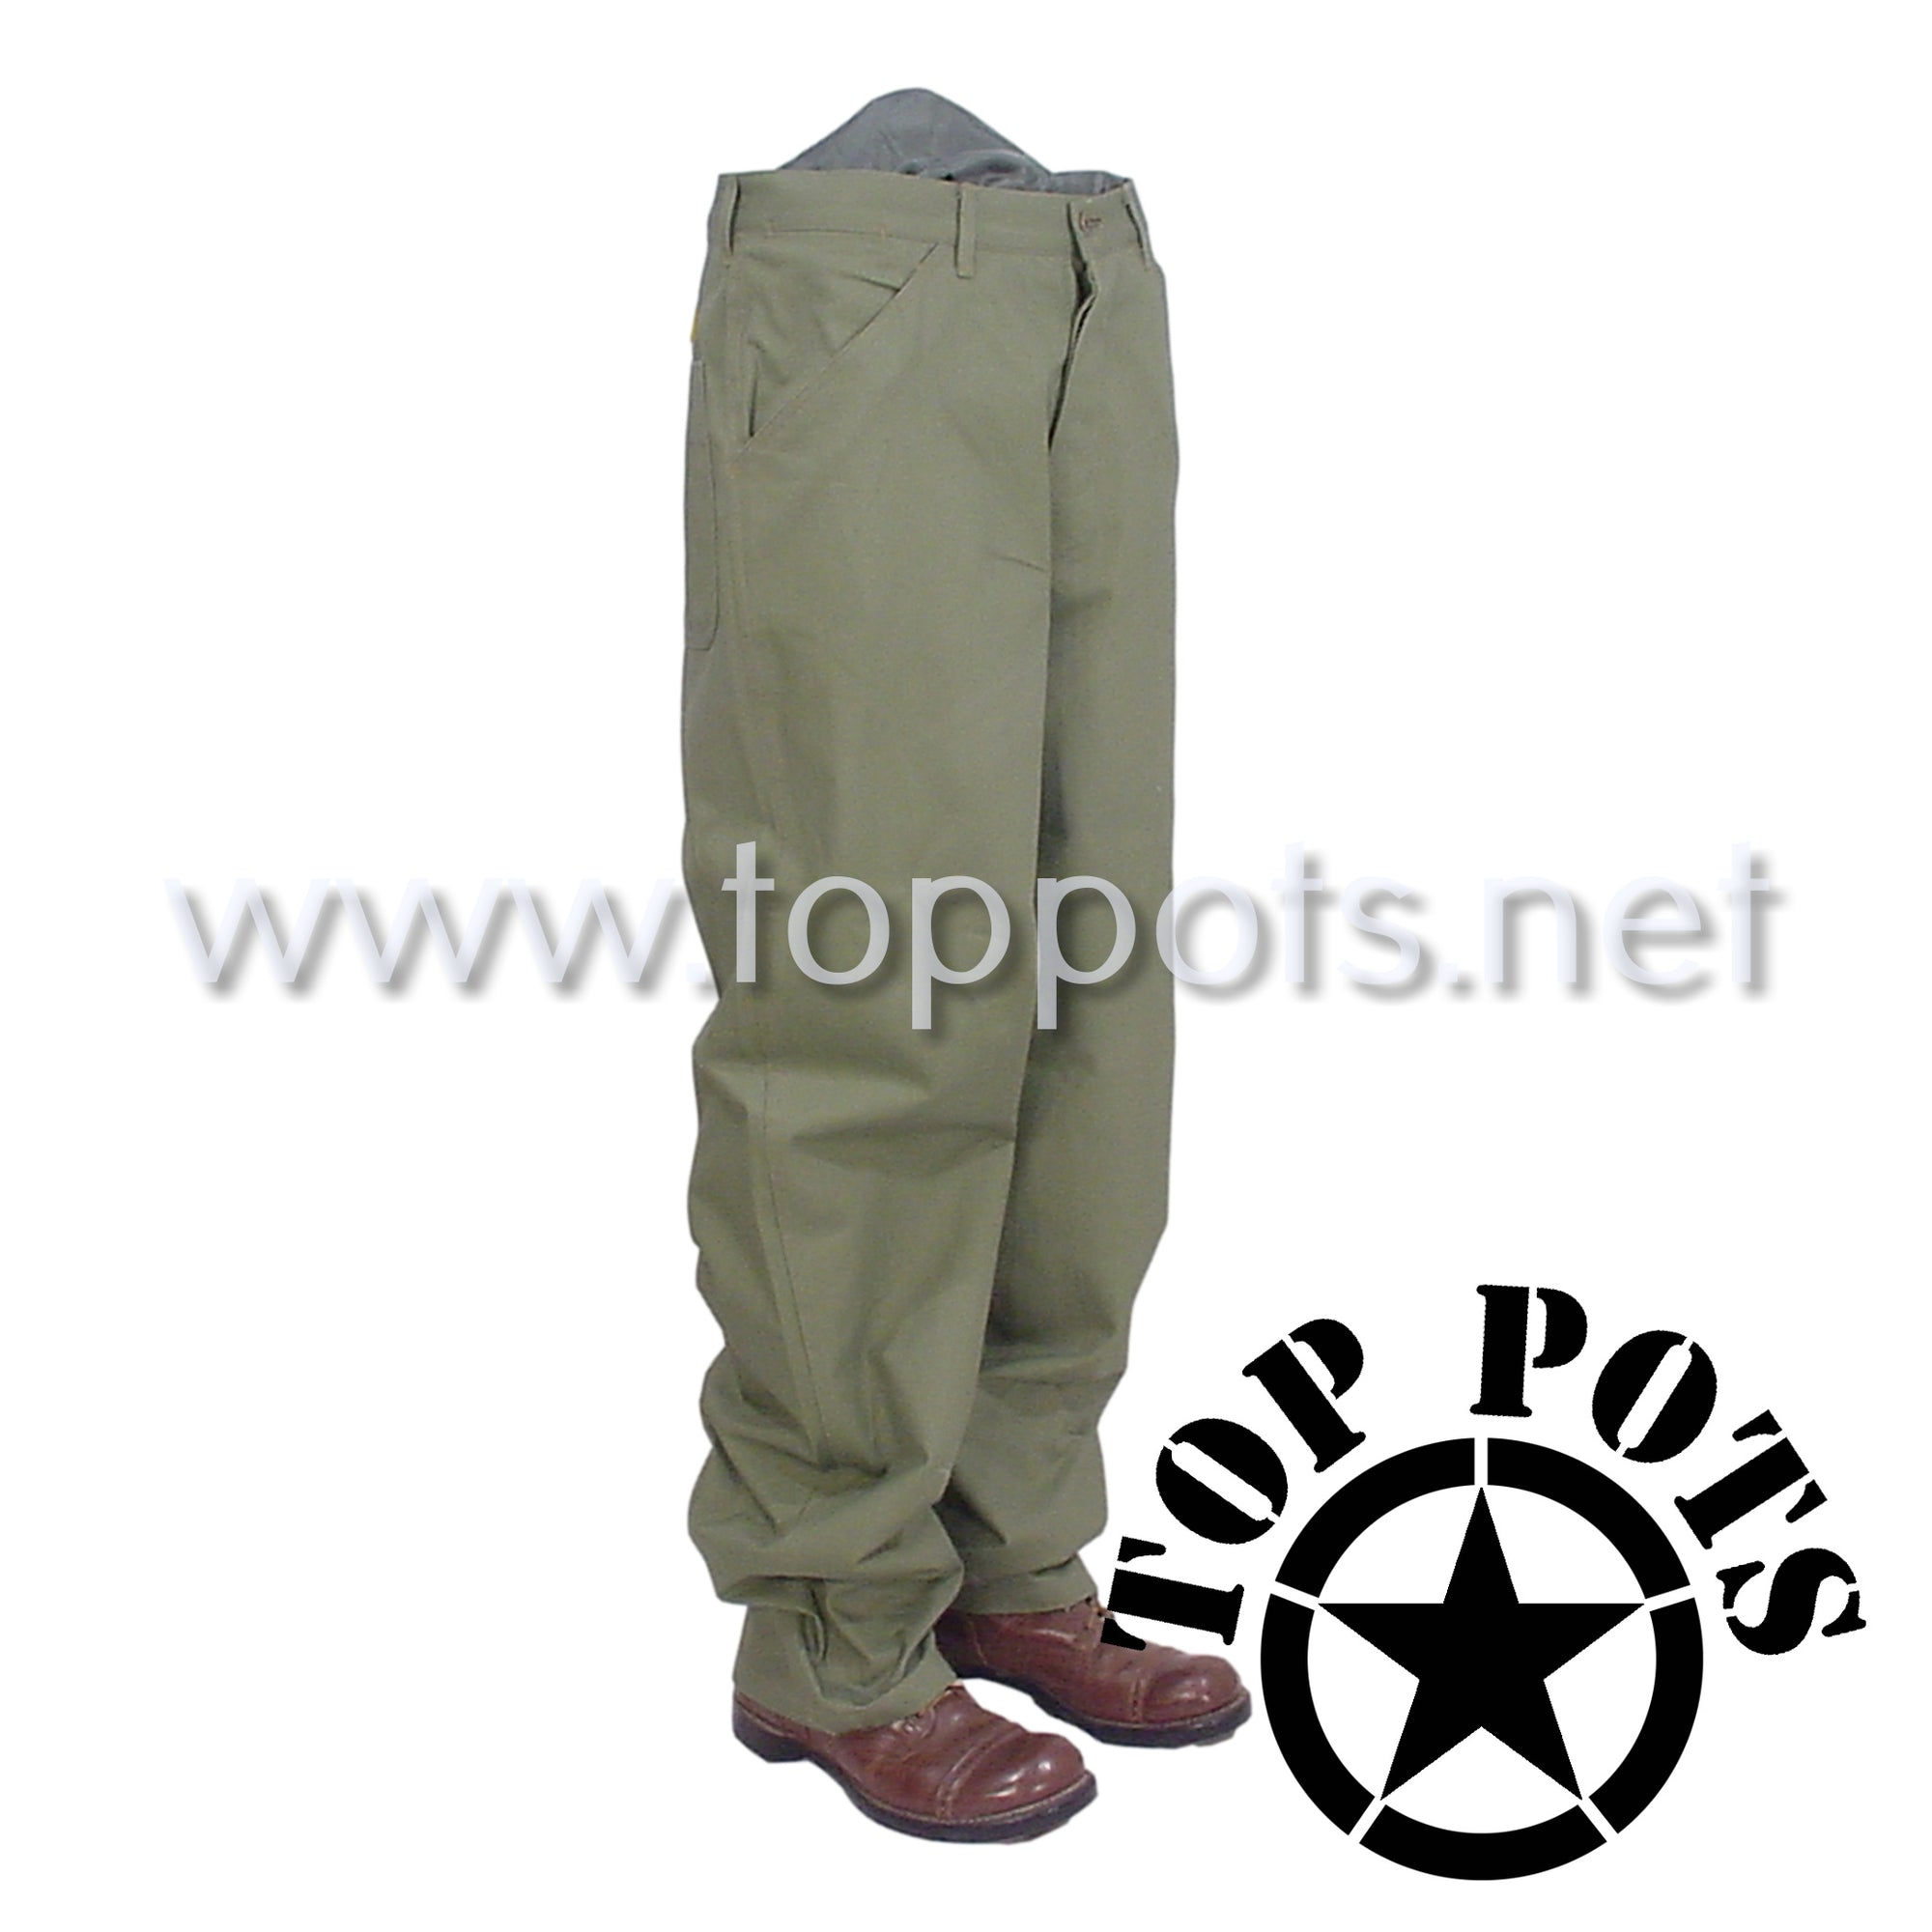 WWII USMC Reproduction M1941 P41 Cotton HBT Uniform Herring Bone Twill Olive Drab Field Utility Fatigue Trouser Pants